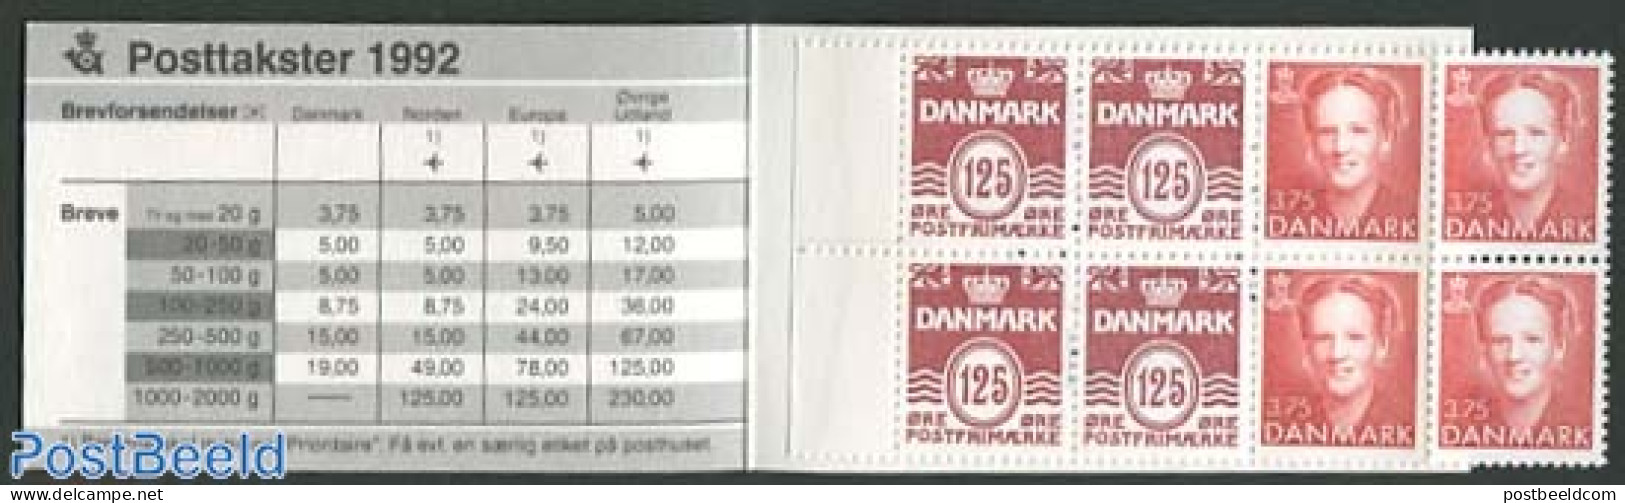 Denmark 1992 Definitives Booklet (H38 On Cover), Mint NH, Stamp Booklets - Unused Stamps